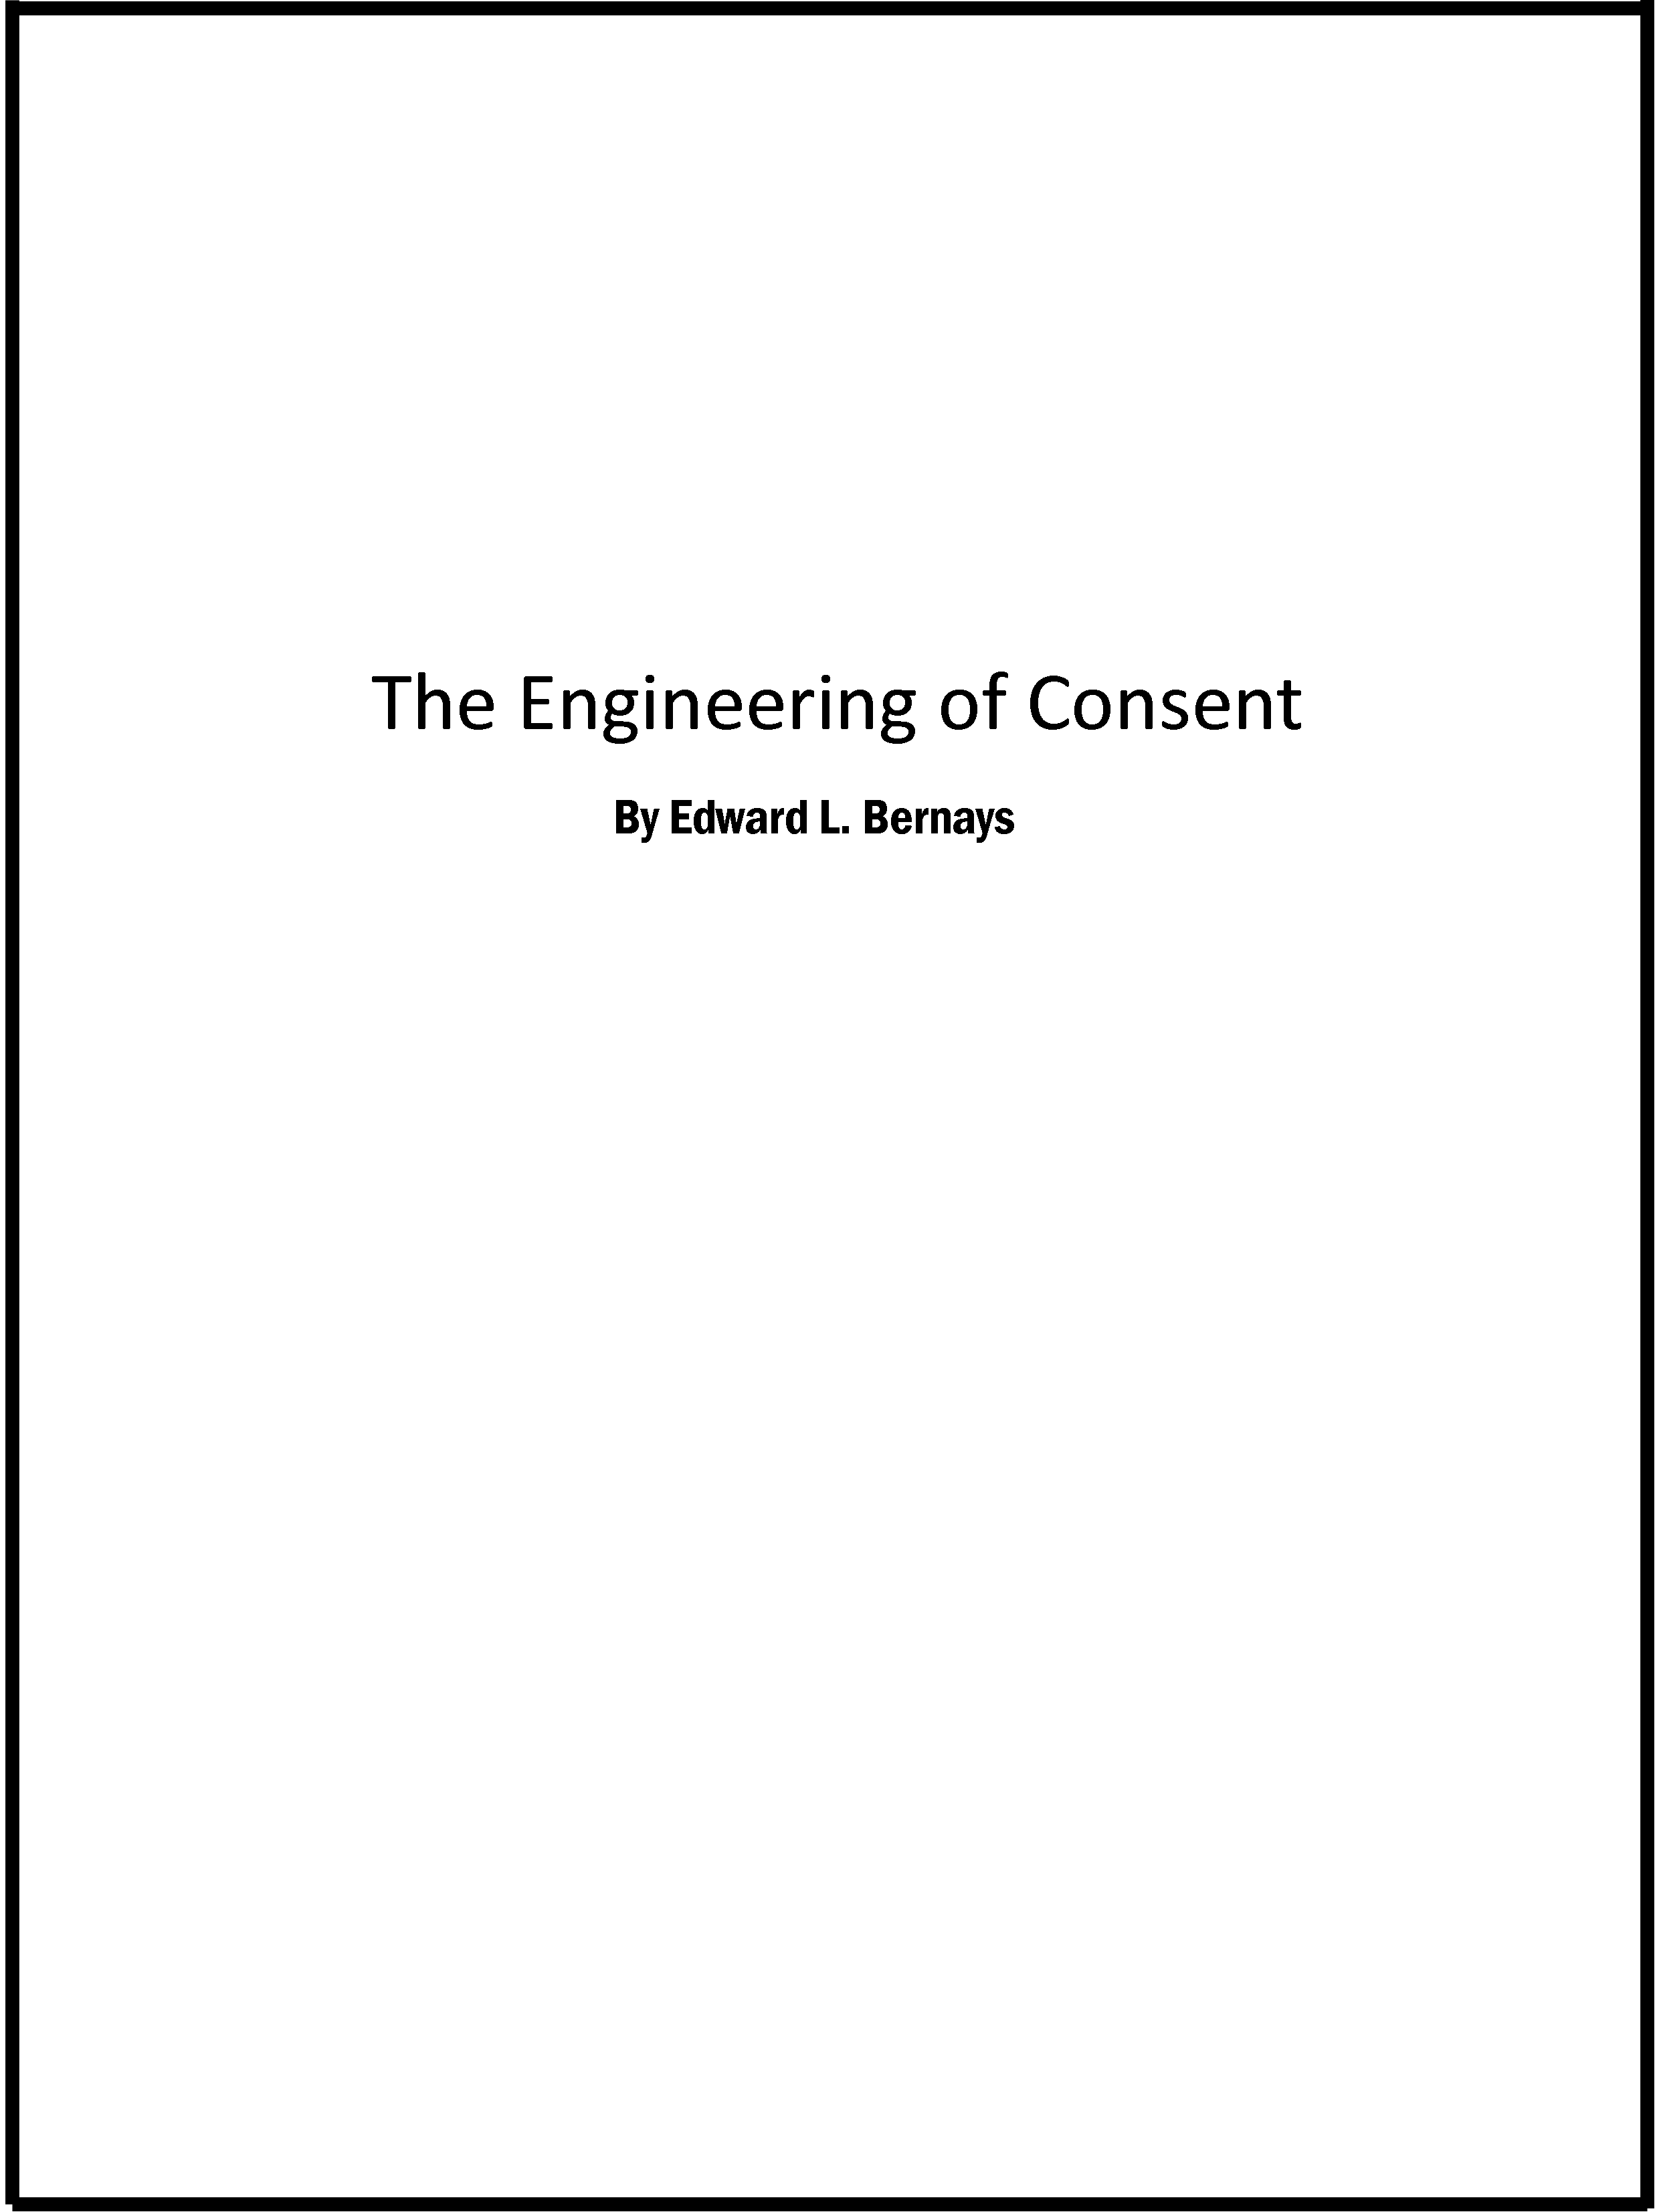 edward bernays engineering of consent pdf merge